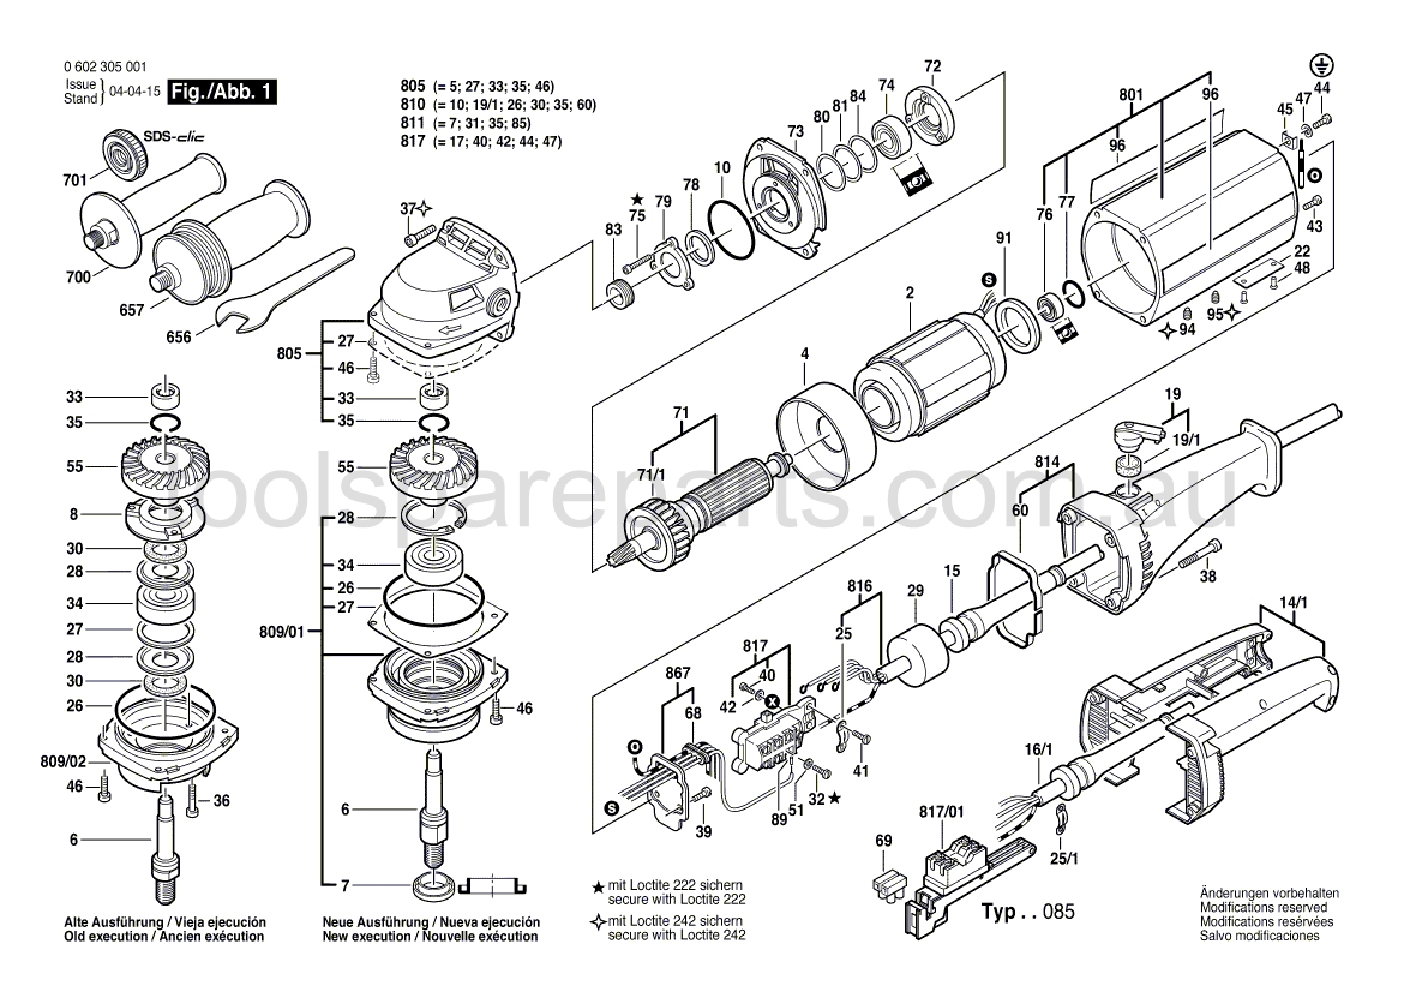 Bosch ---- 0602305001  Diagram 1